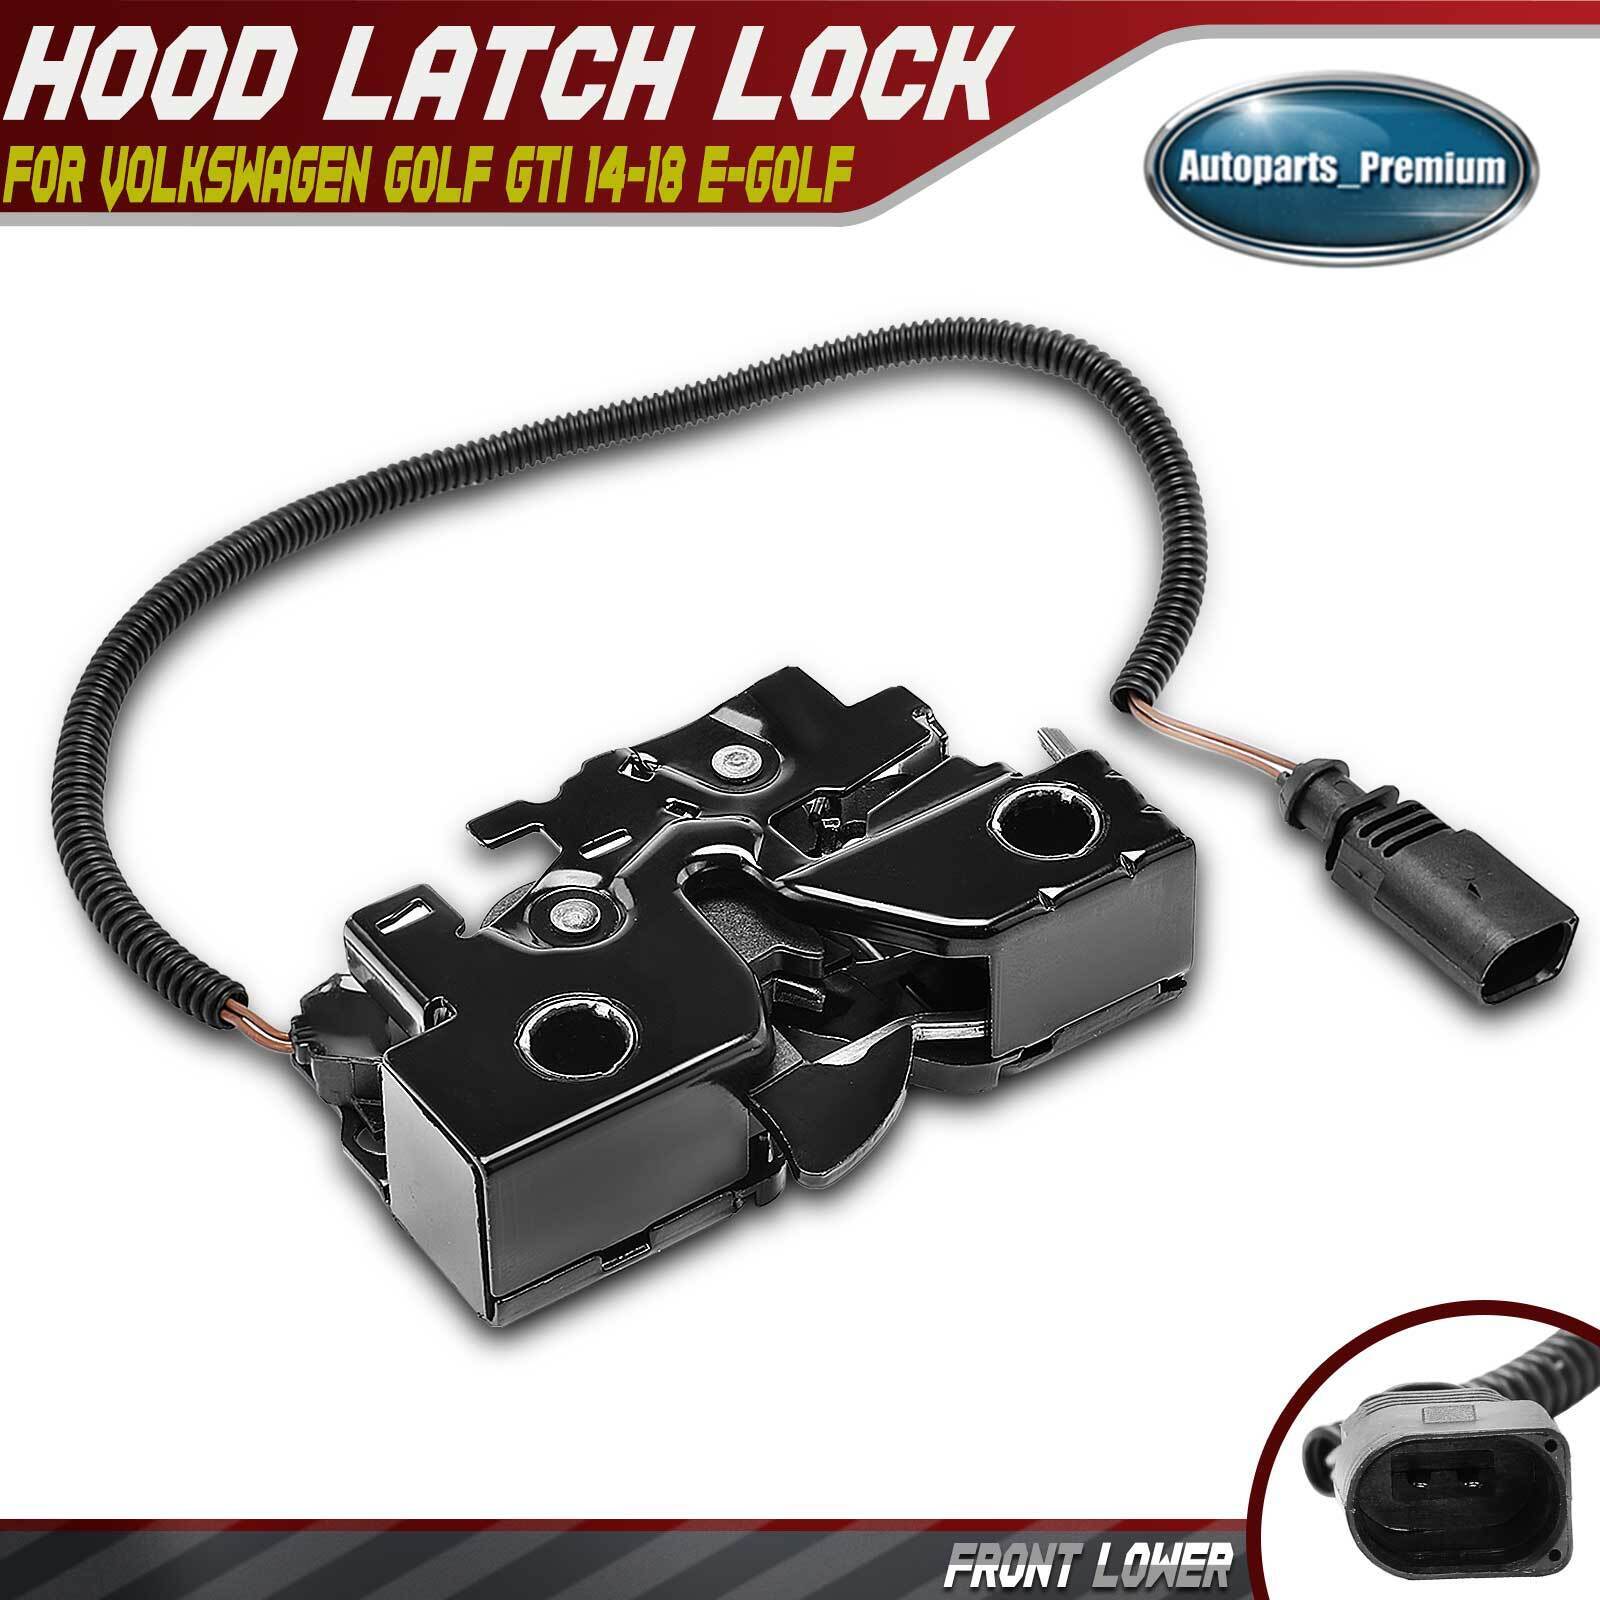 Front Lower Hood Latch Lock for Volkswagen Golf GTI 14-18 e-Golf Golf R 15-18